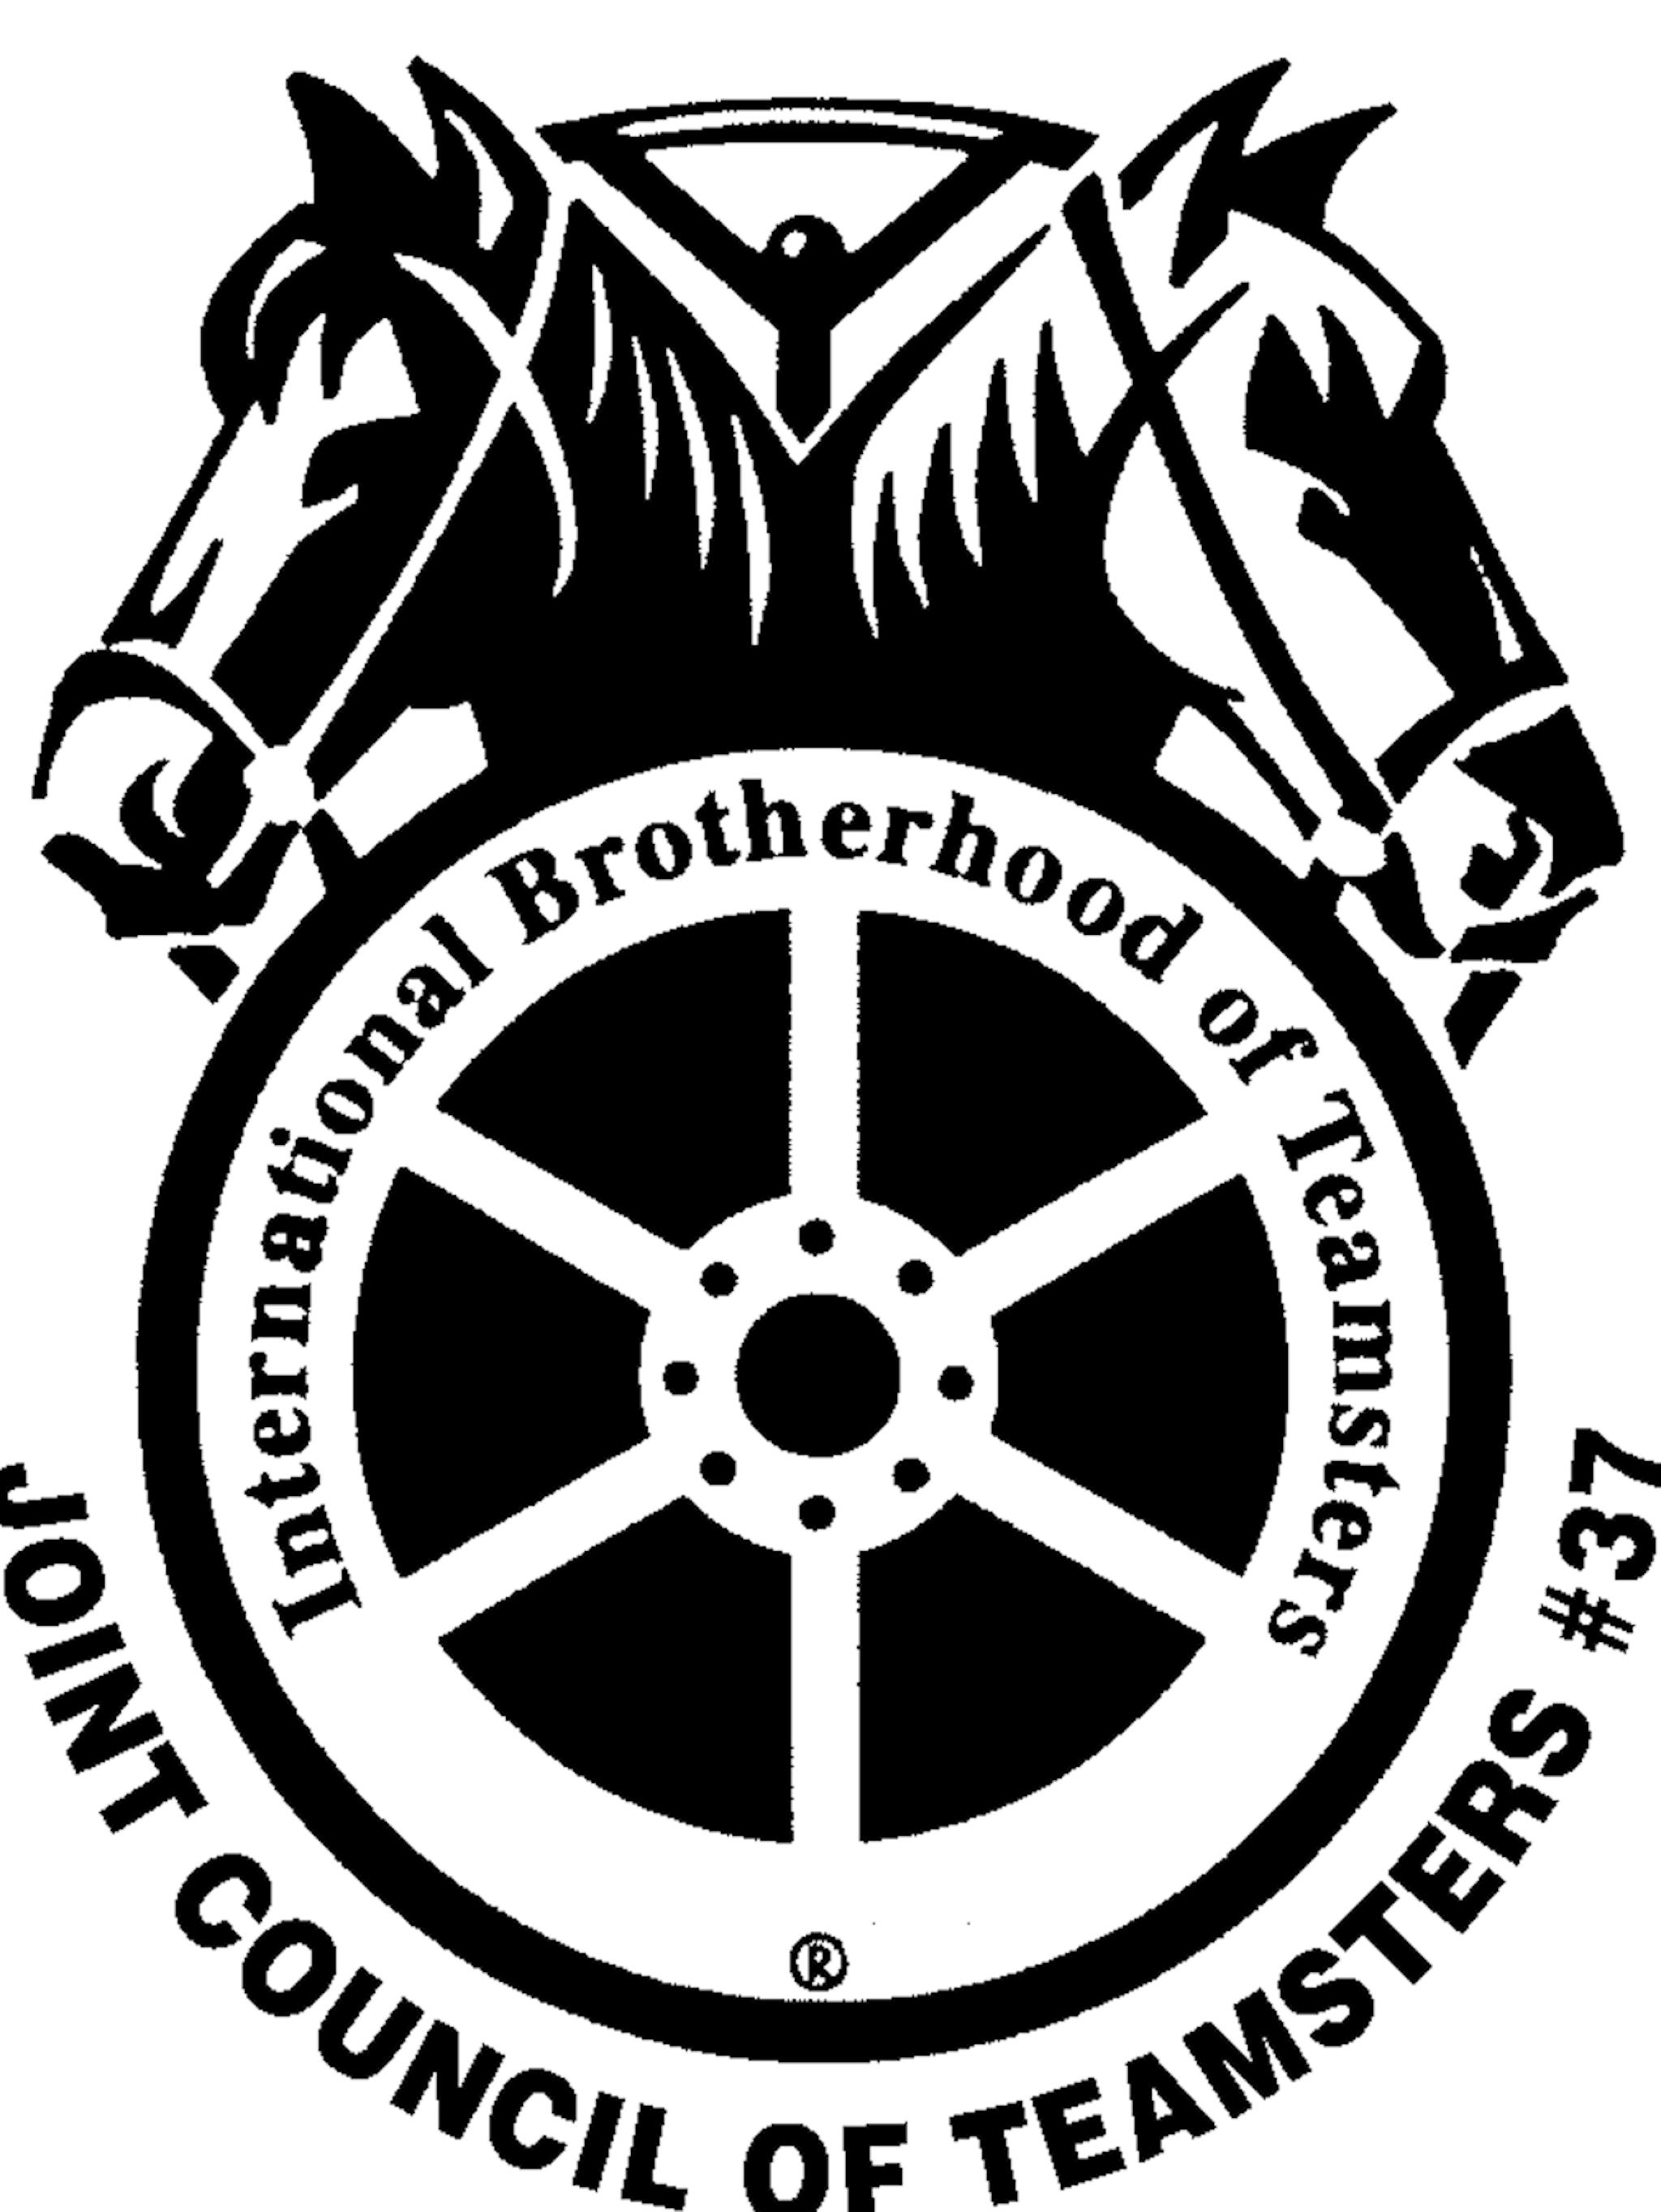 International Brotherhood of Teamsters - Joint Council of Teamsters #37